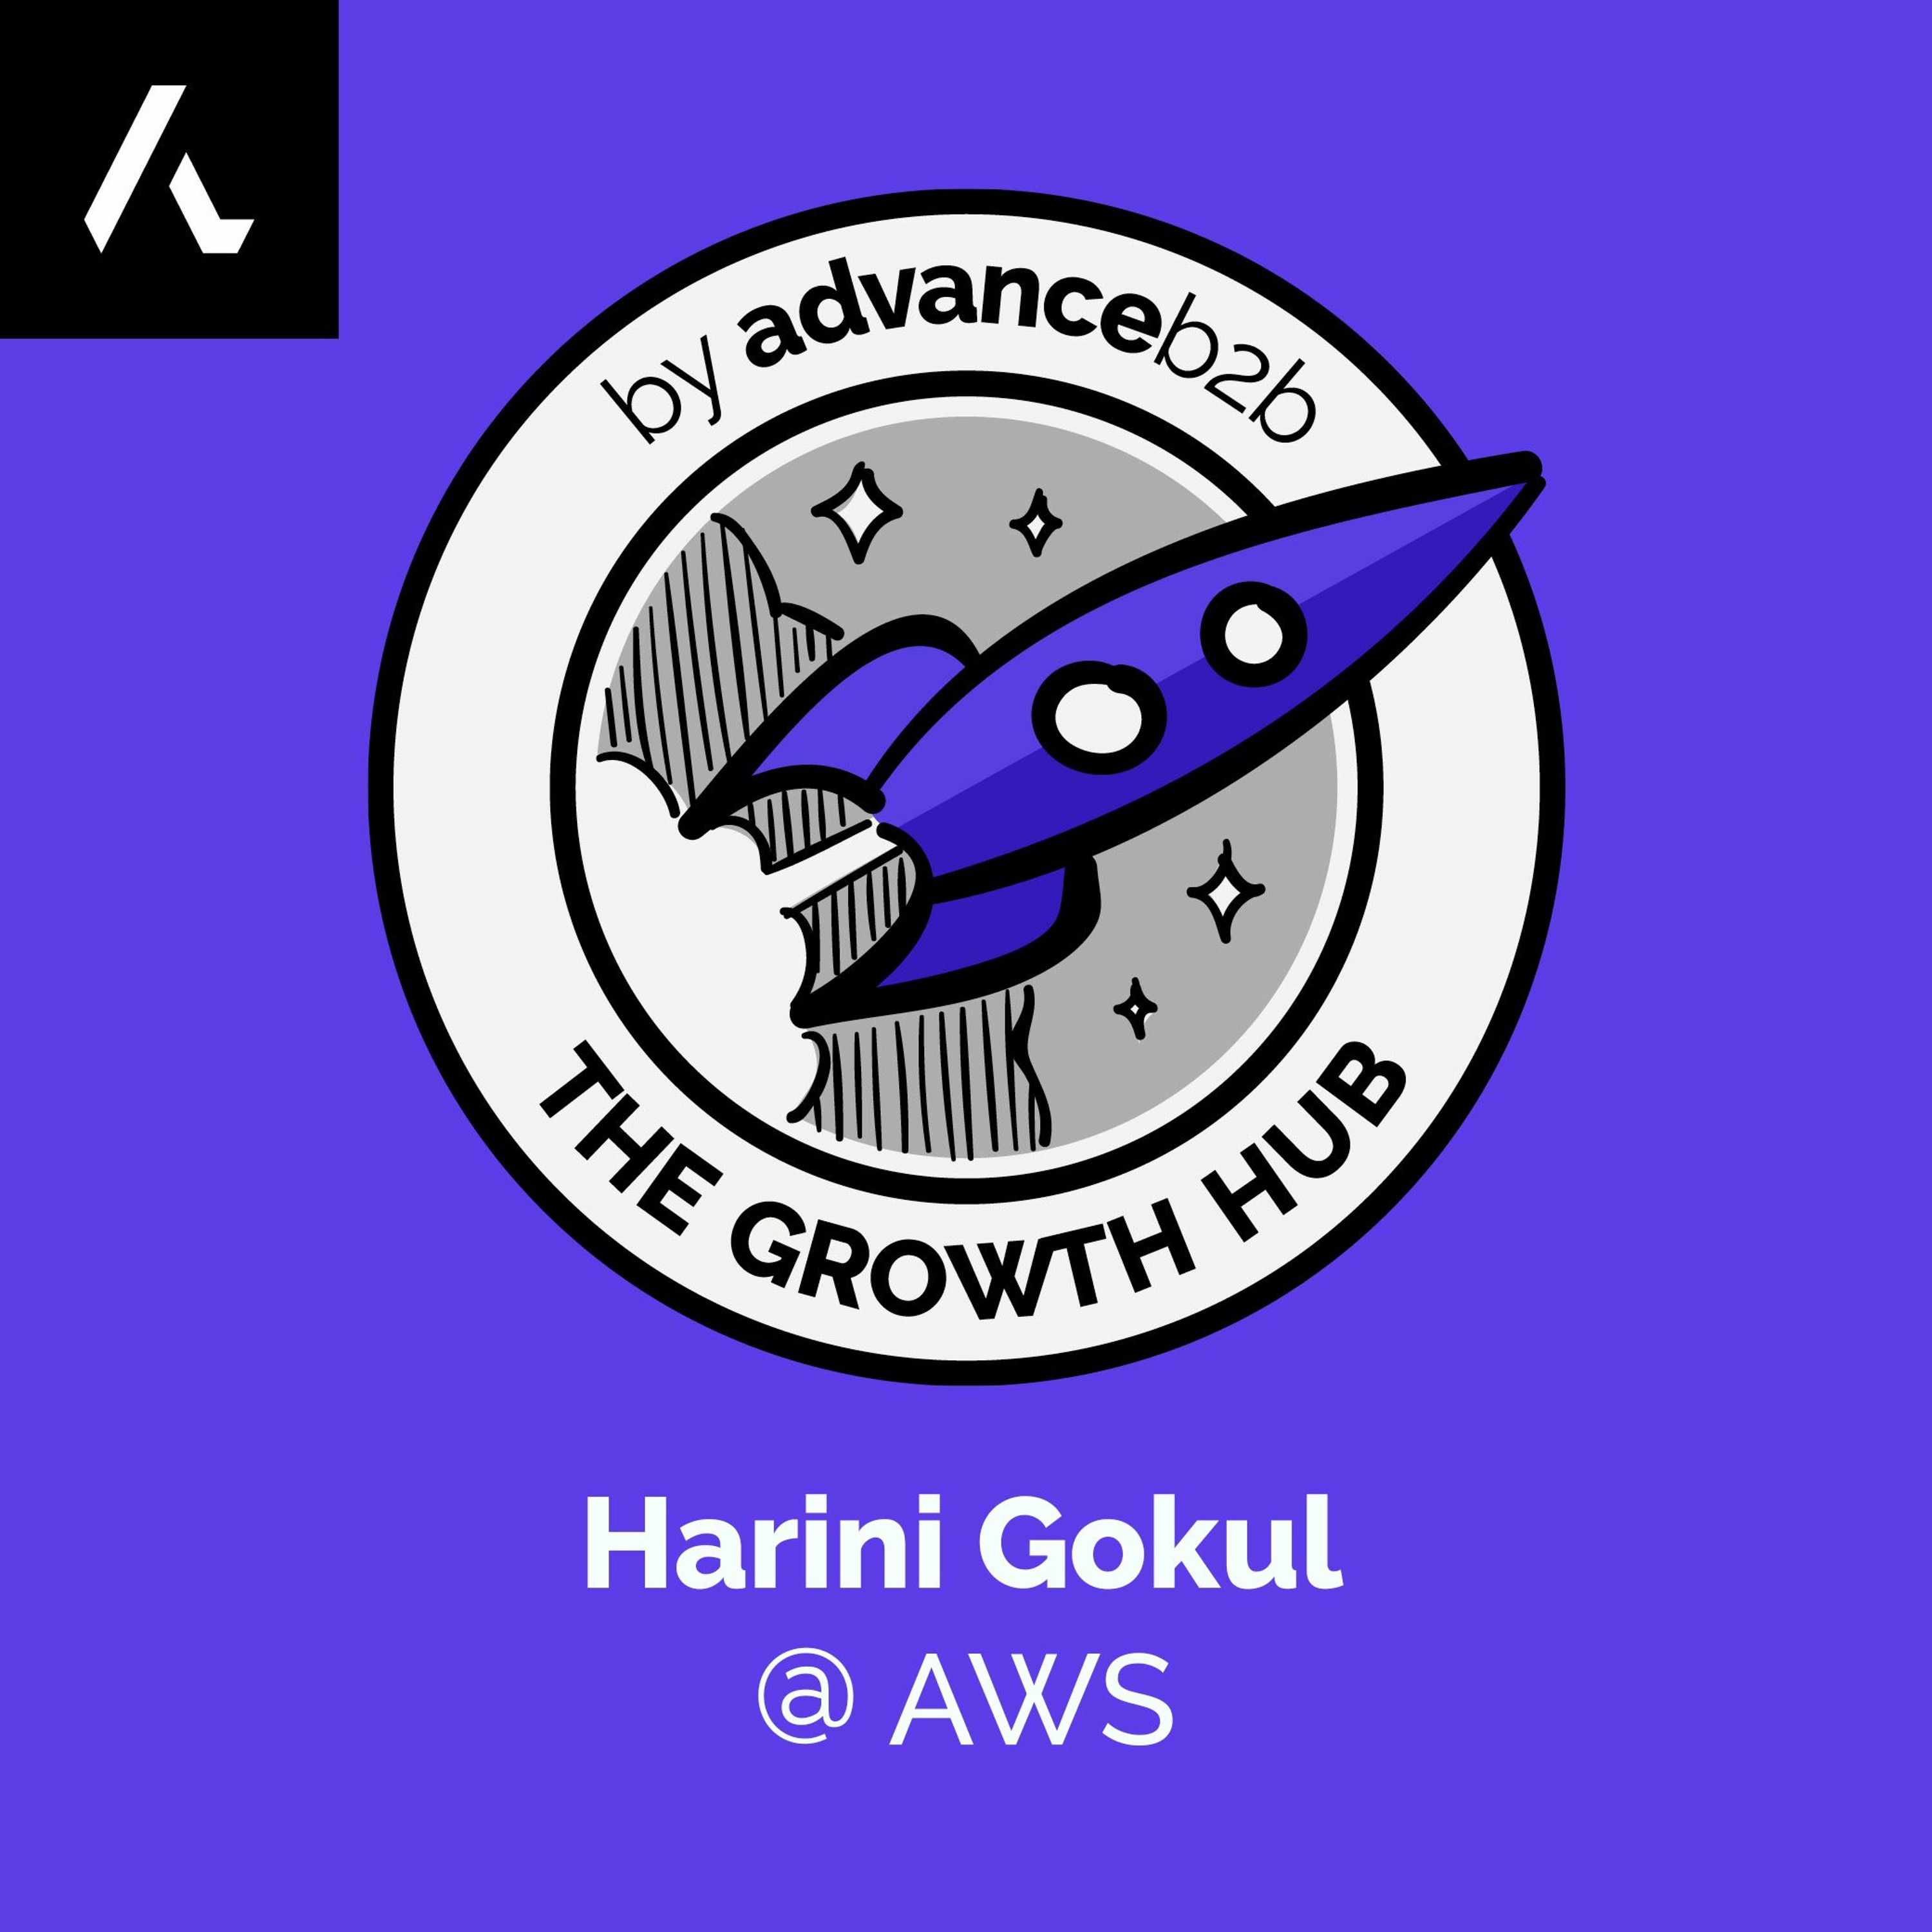 Harini Gokul - Head of Customer Success @AWS - Use Credibility, Talent and Customers to Build Growth